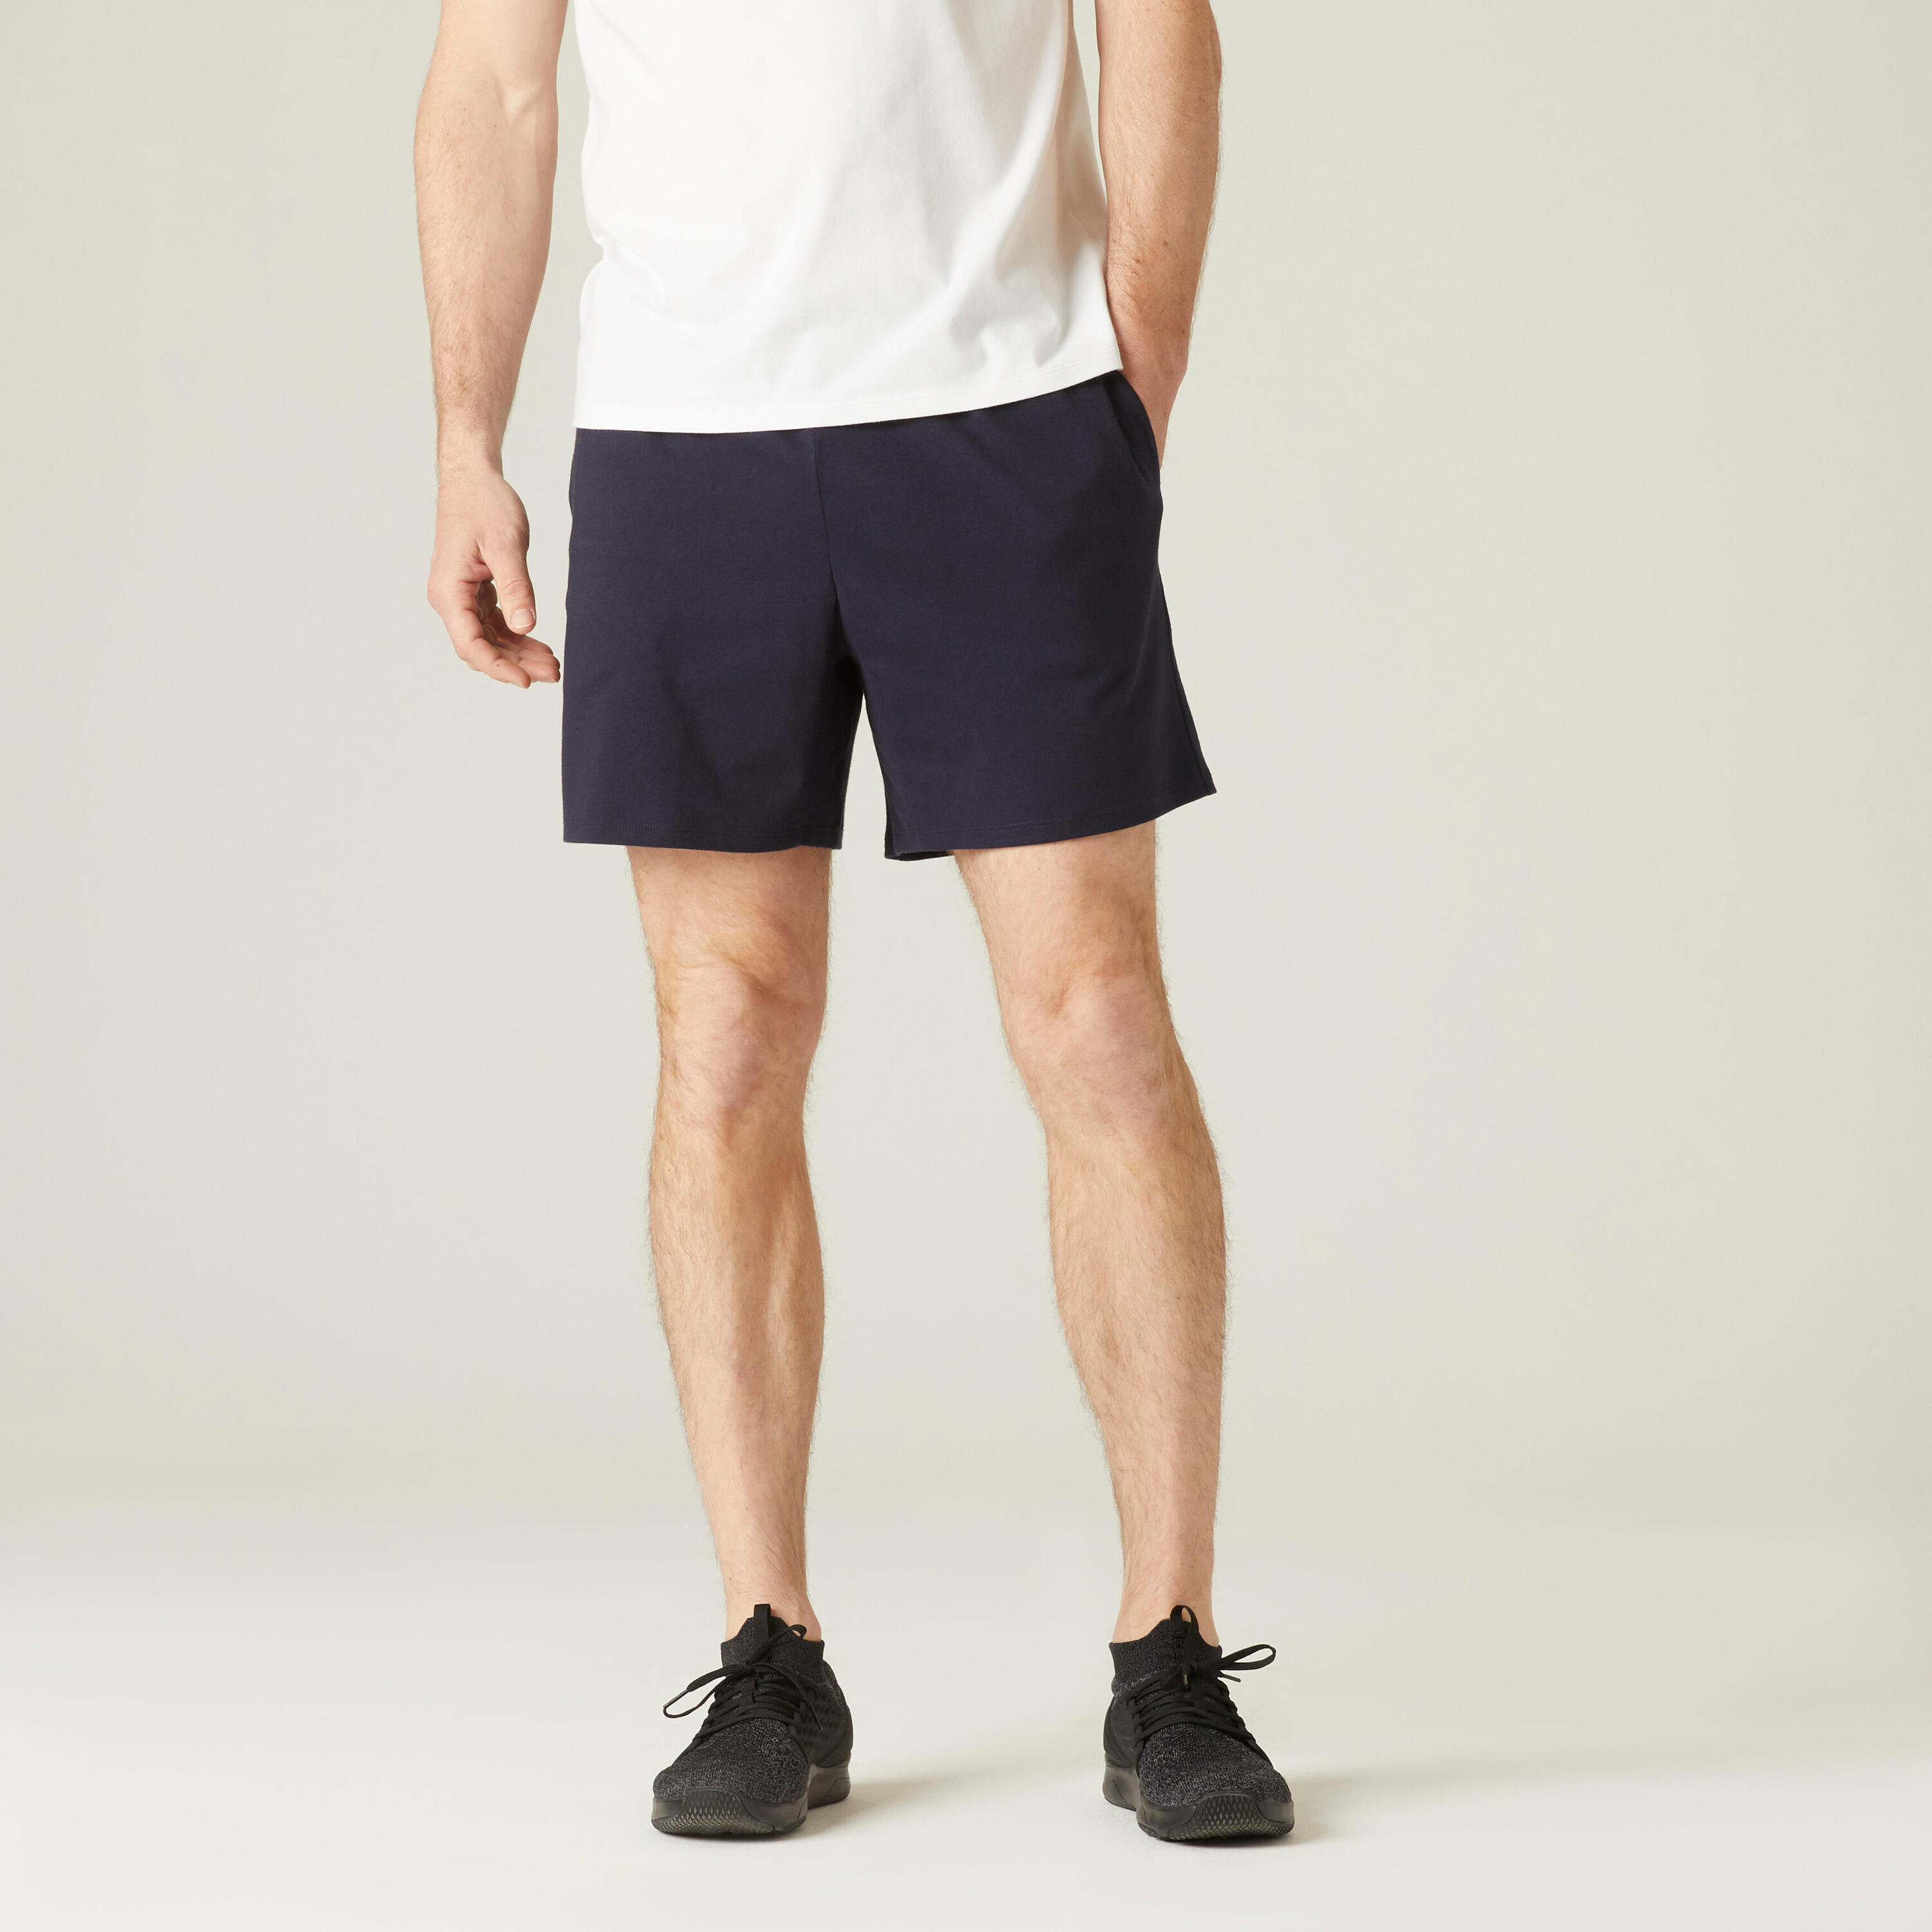 Men's Short Fitness Shorts 100 - Blue / Black 1/5